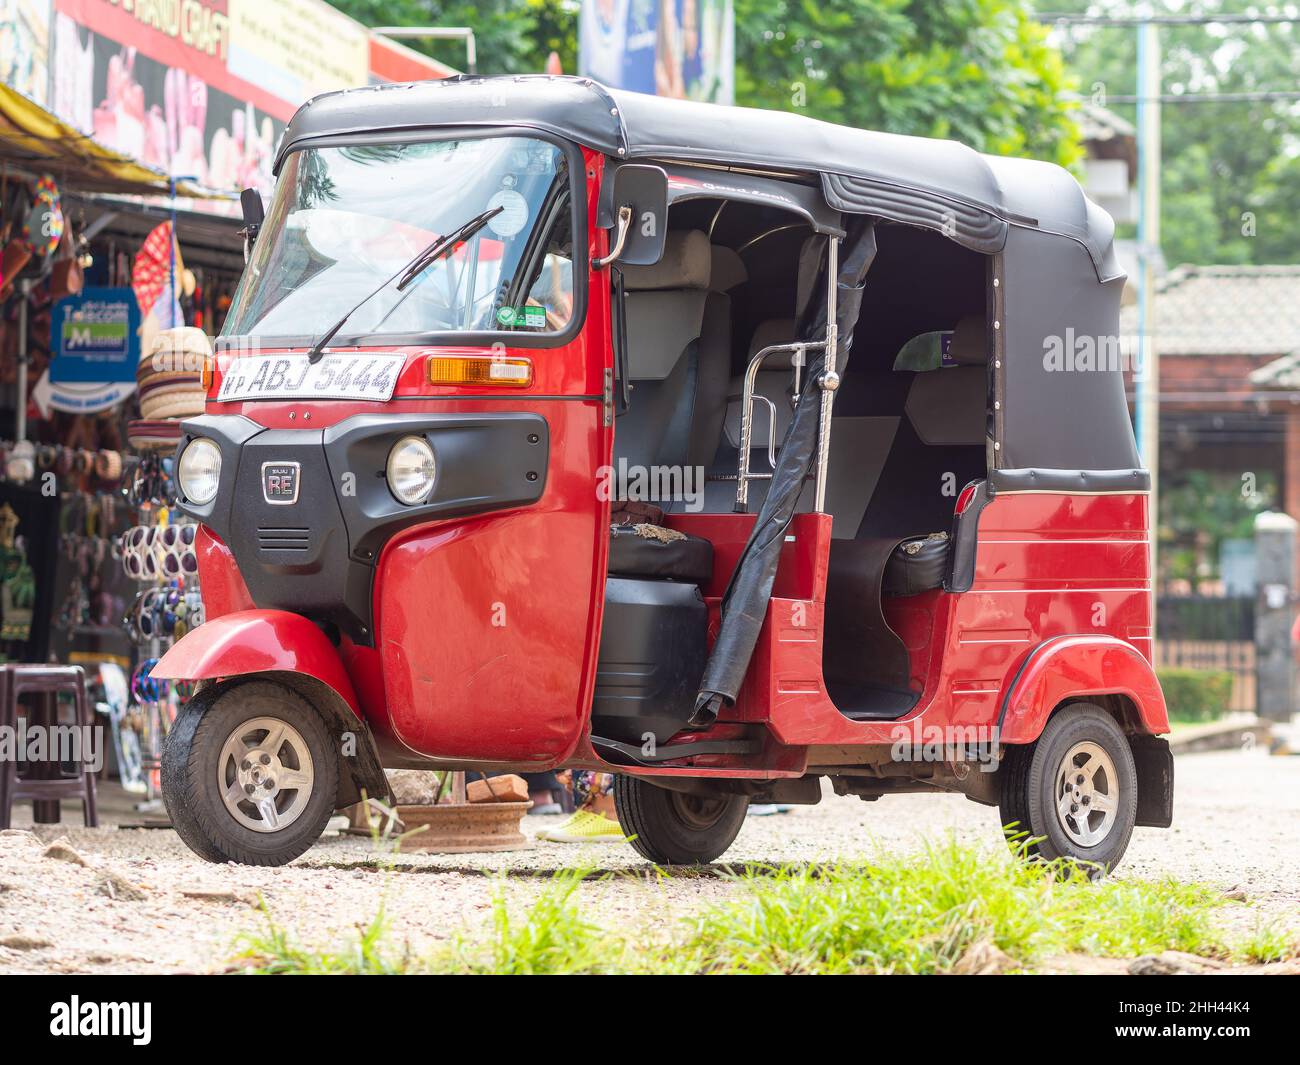 Auto rickshaw, also called tuk-tuk, in Pinnawala, Sri Lanka Stock Photo